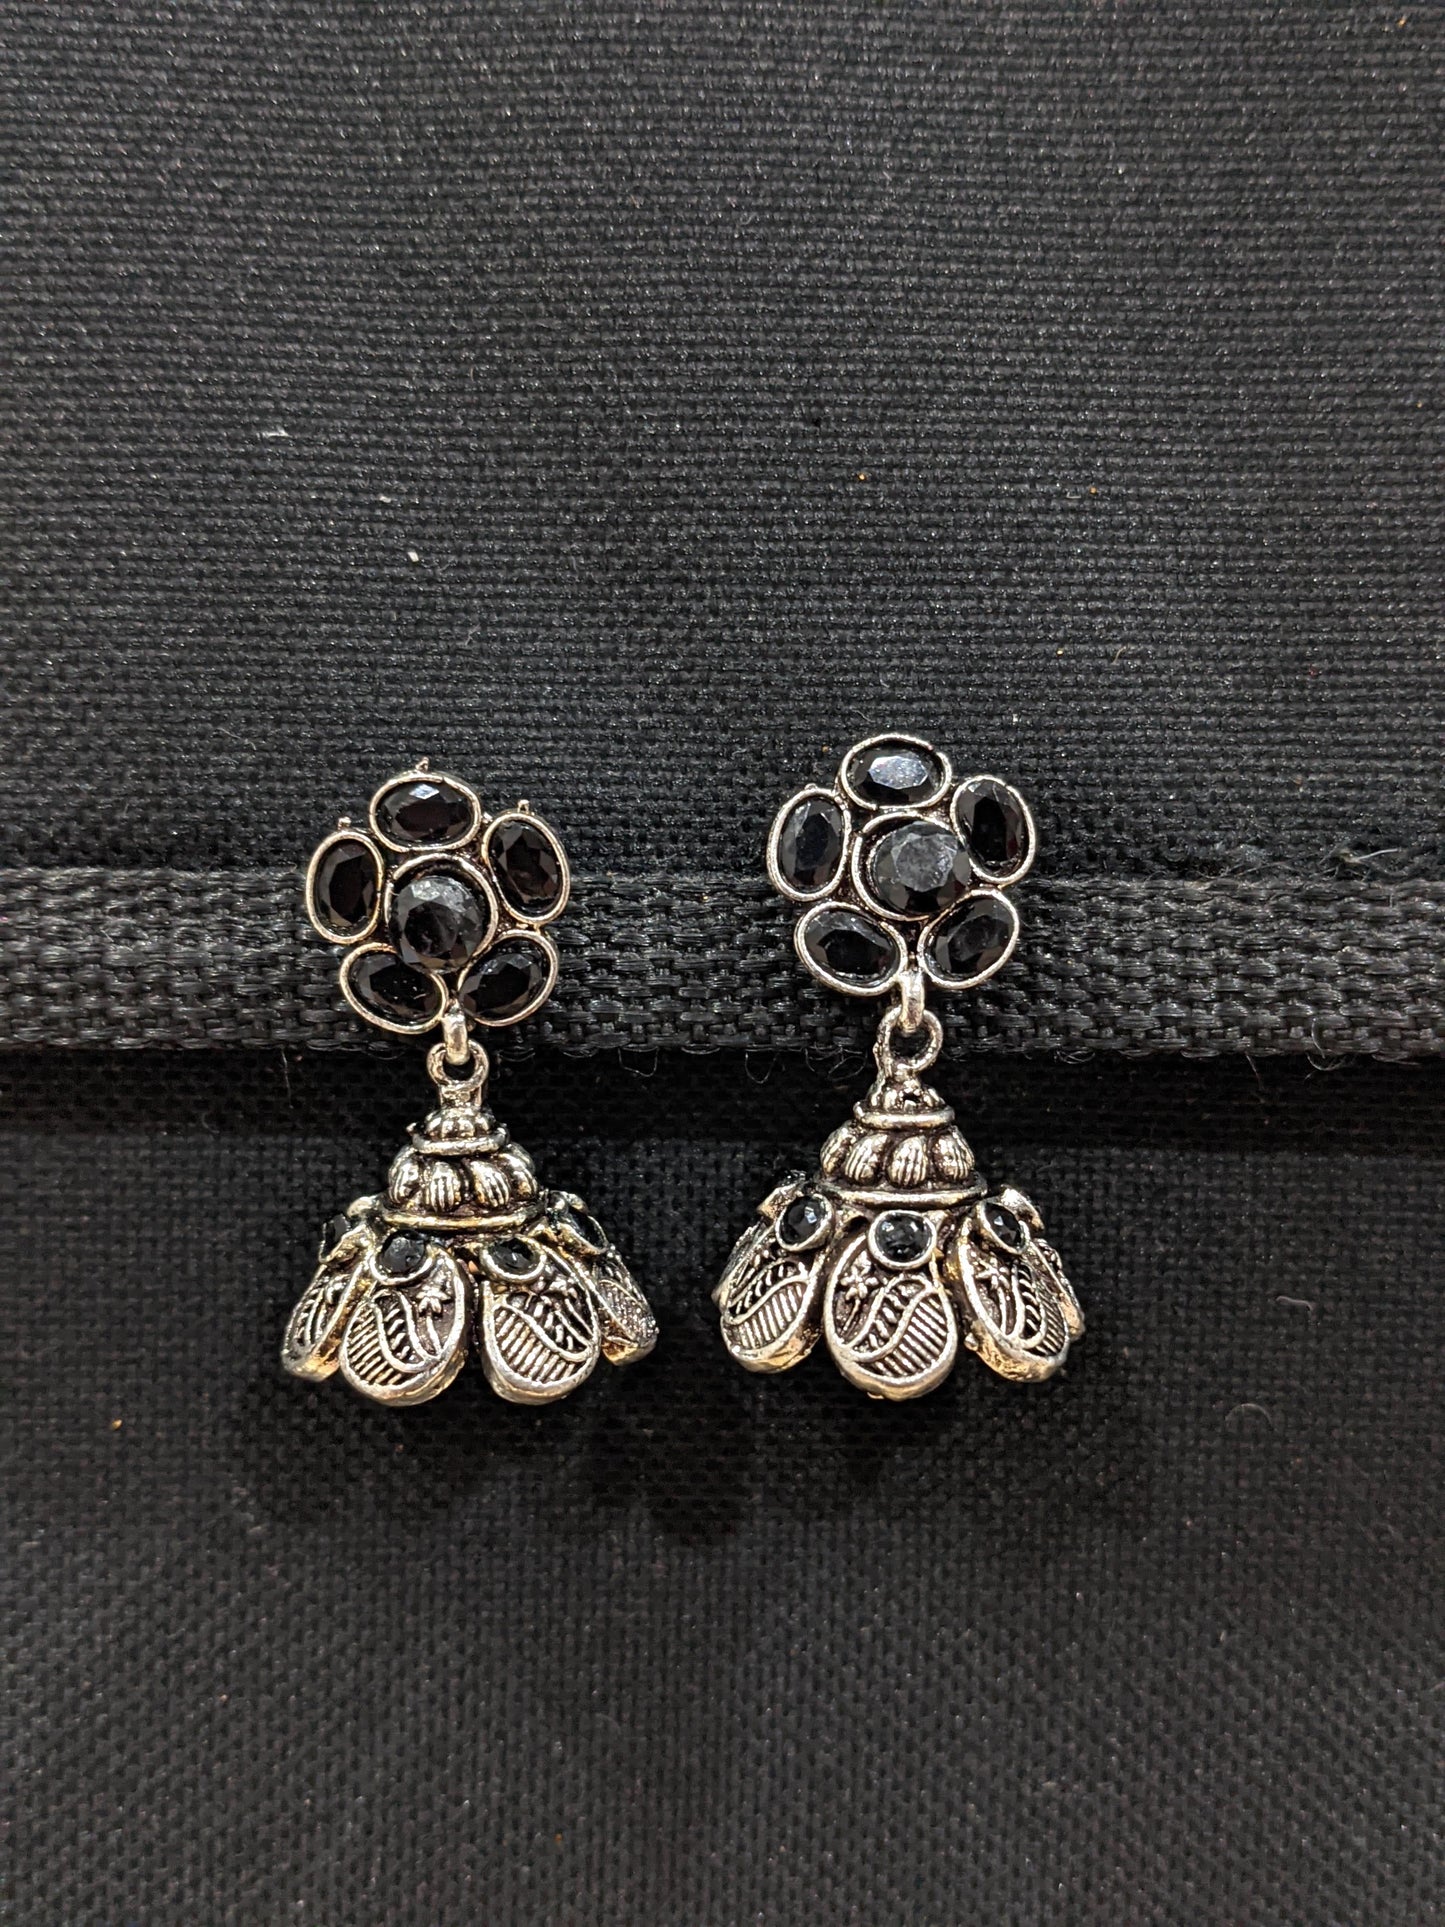 Polki - Enamel oxidized silver Jhumka Earrings - 5 designs